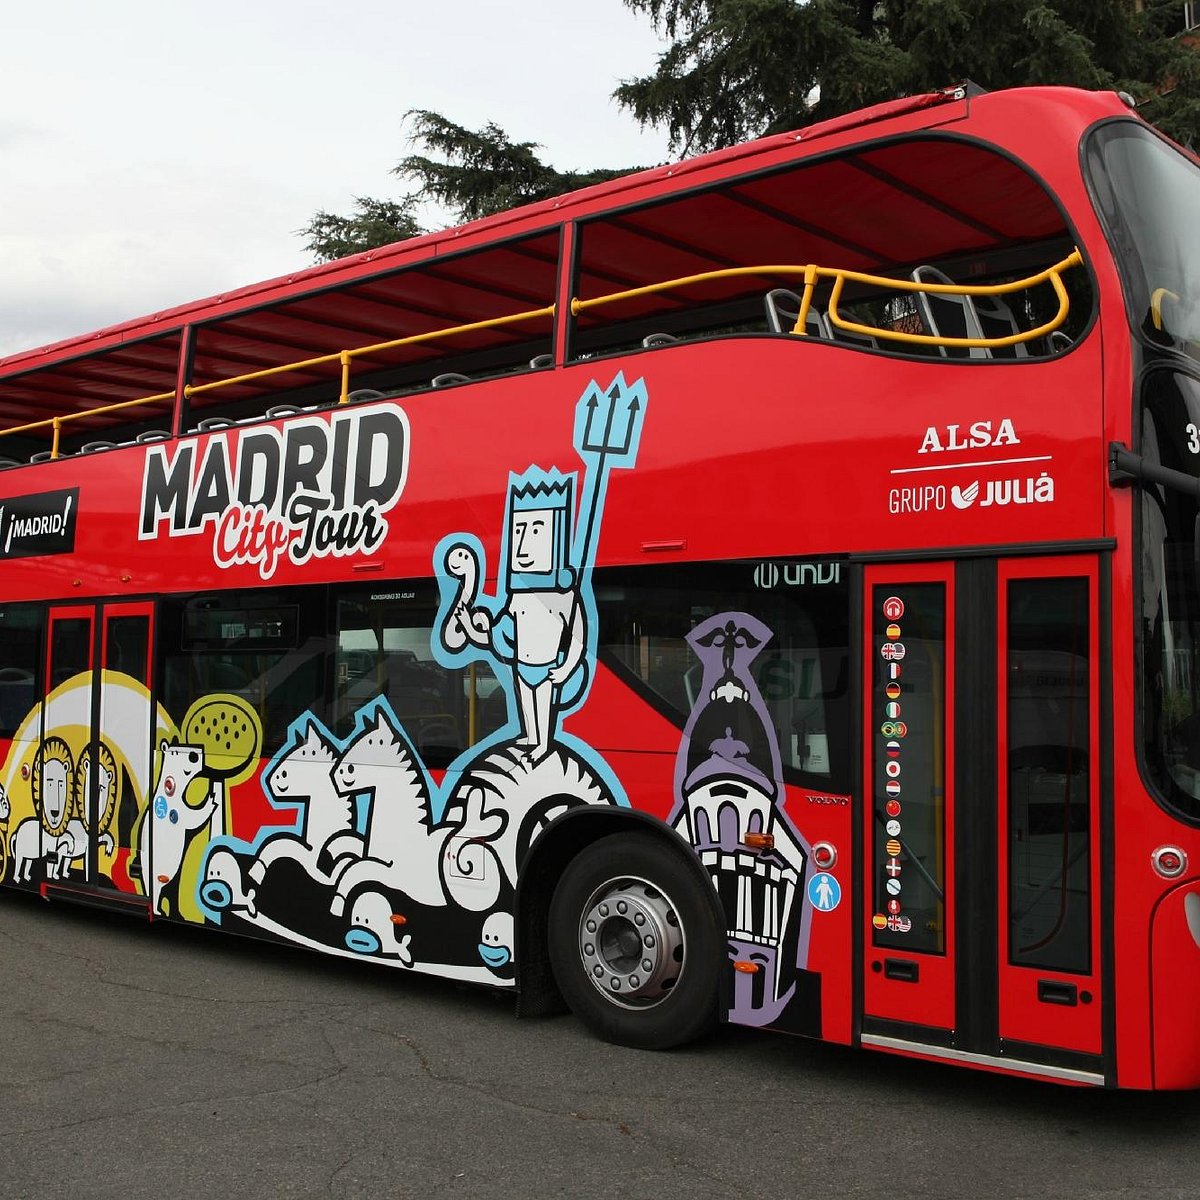 Madrid City Tour - More Madrid